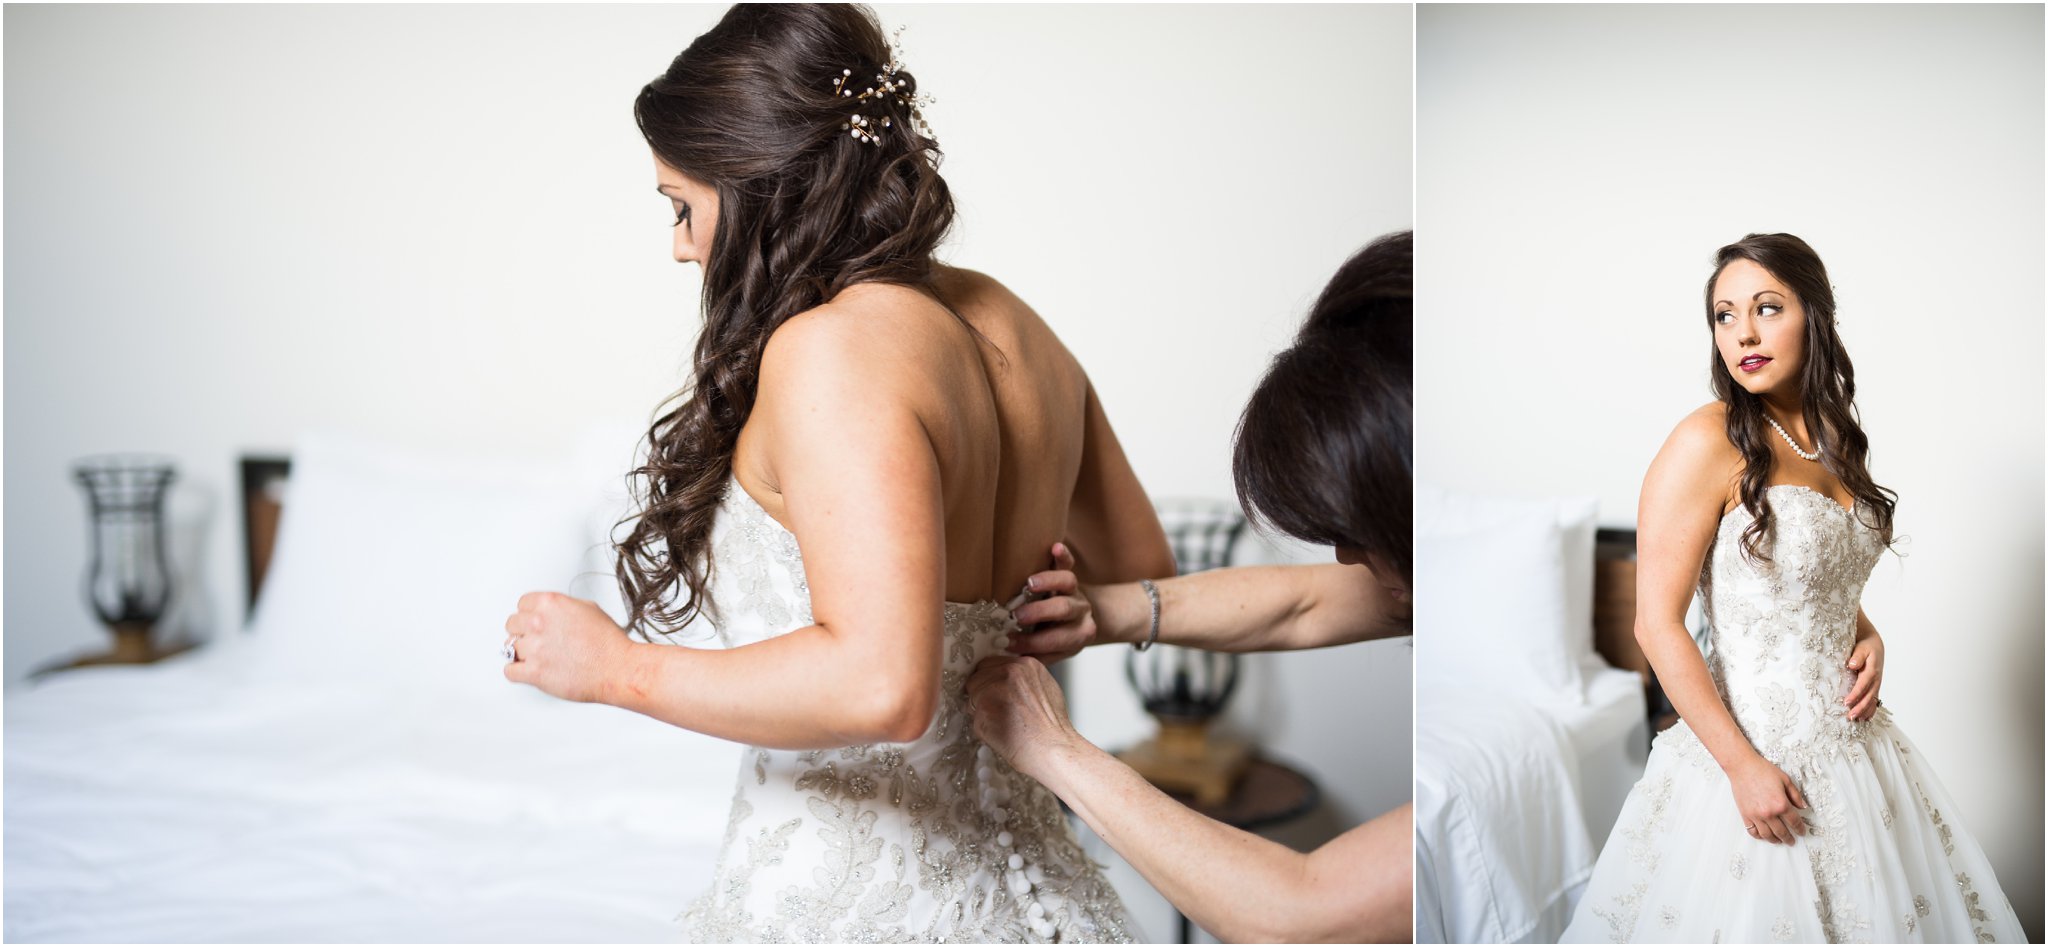 Classic-bride-getting-ready-photos